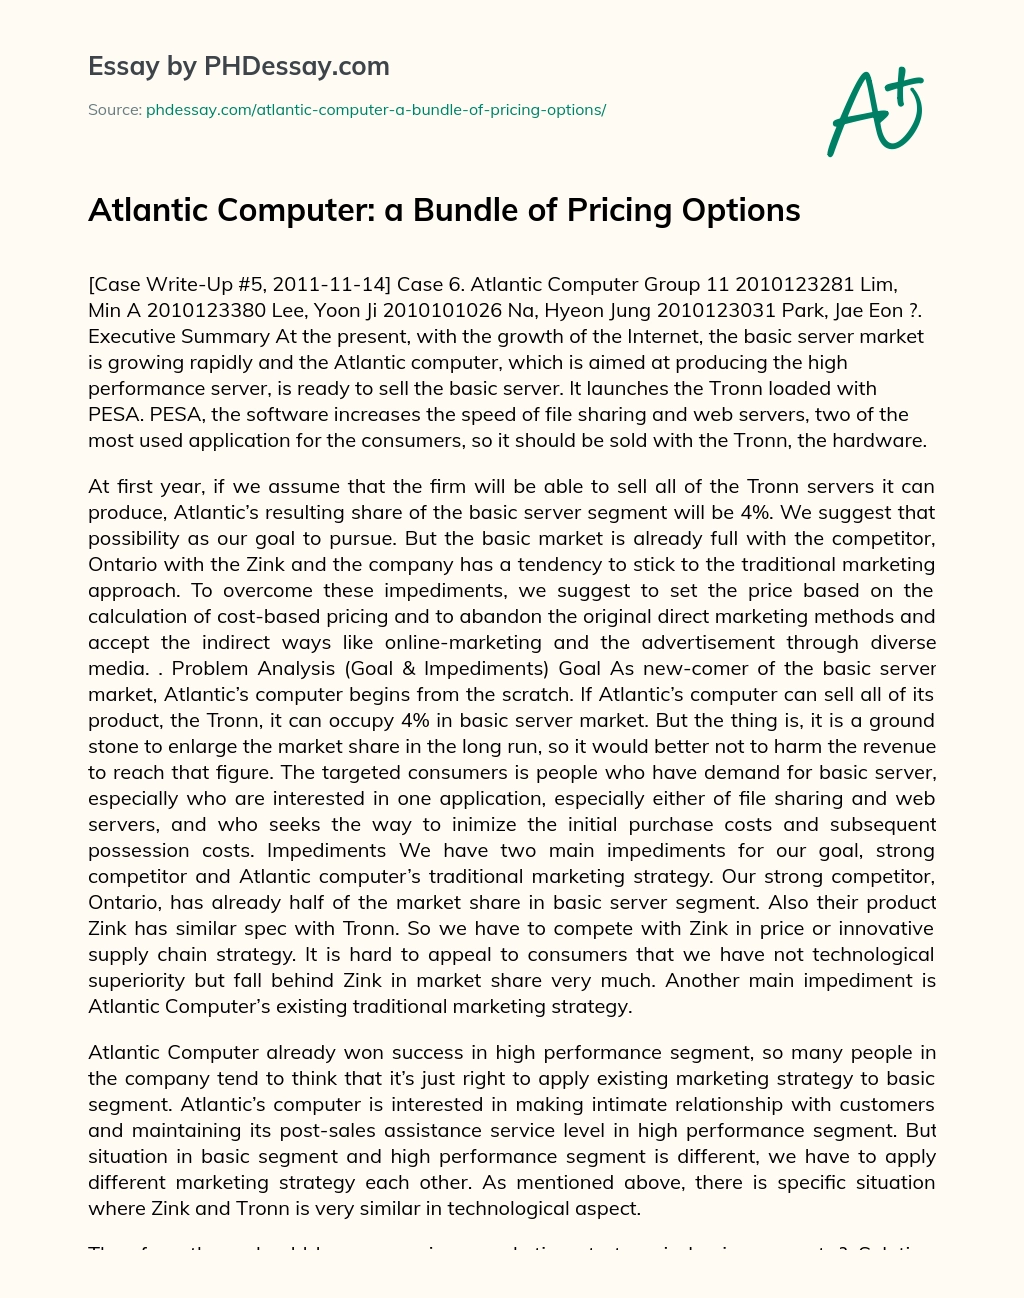 Atlantic Computer: a Bundle of Pricing Options essay